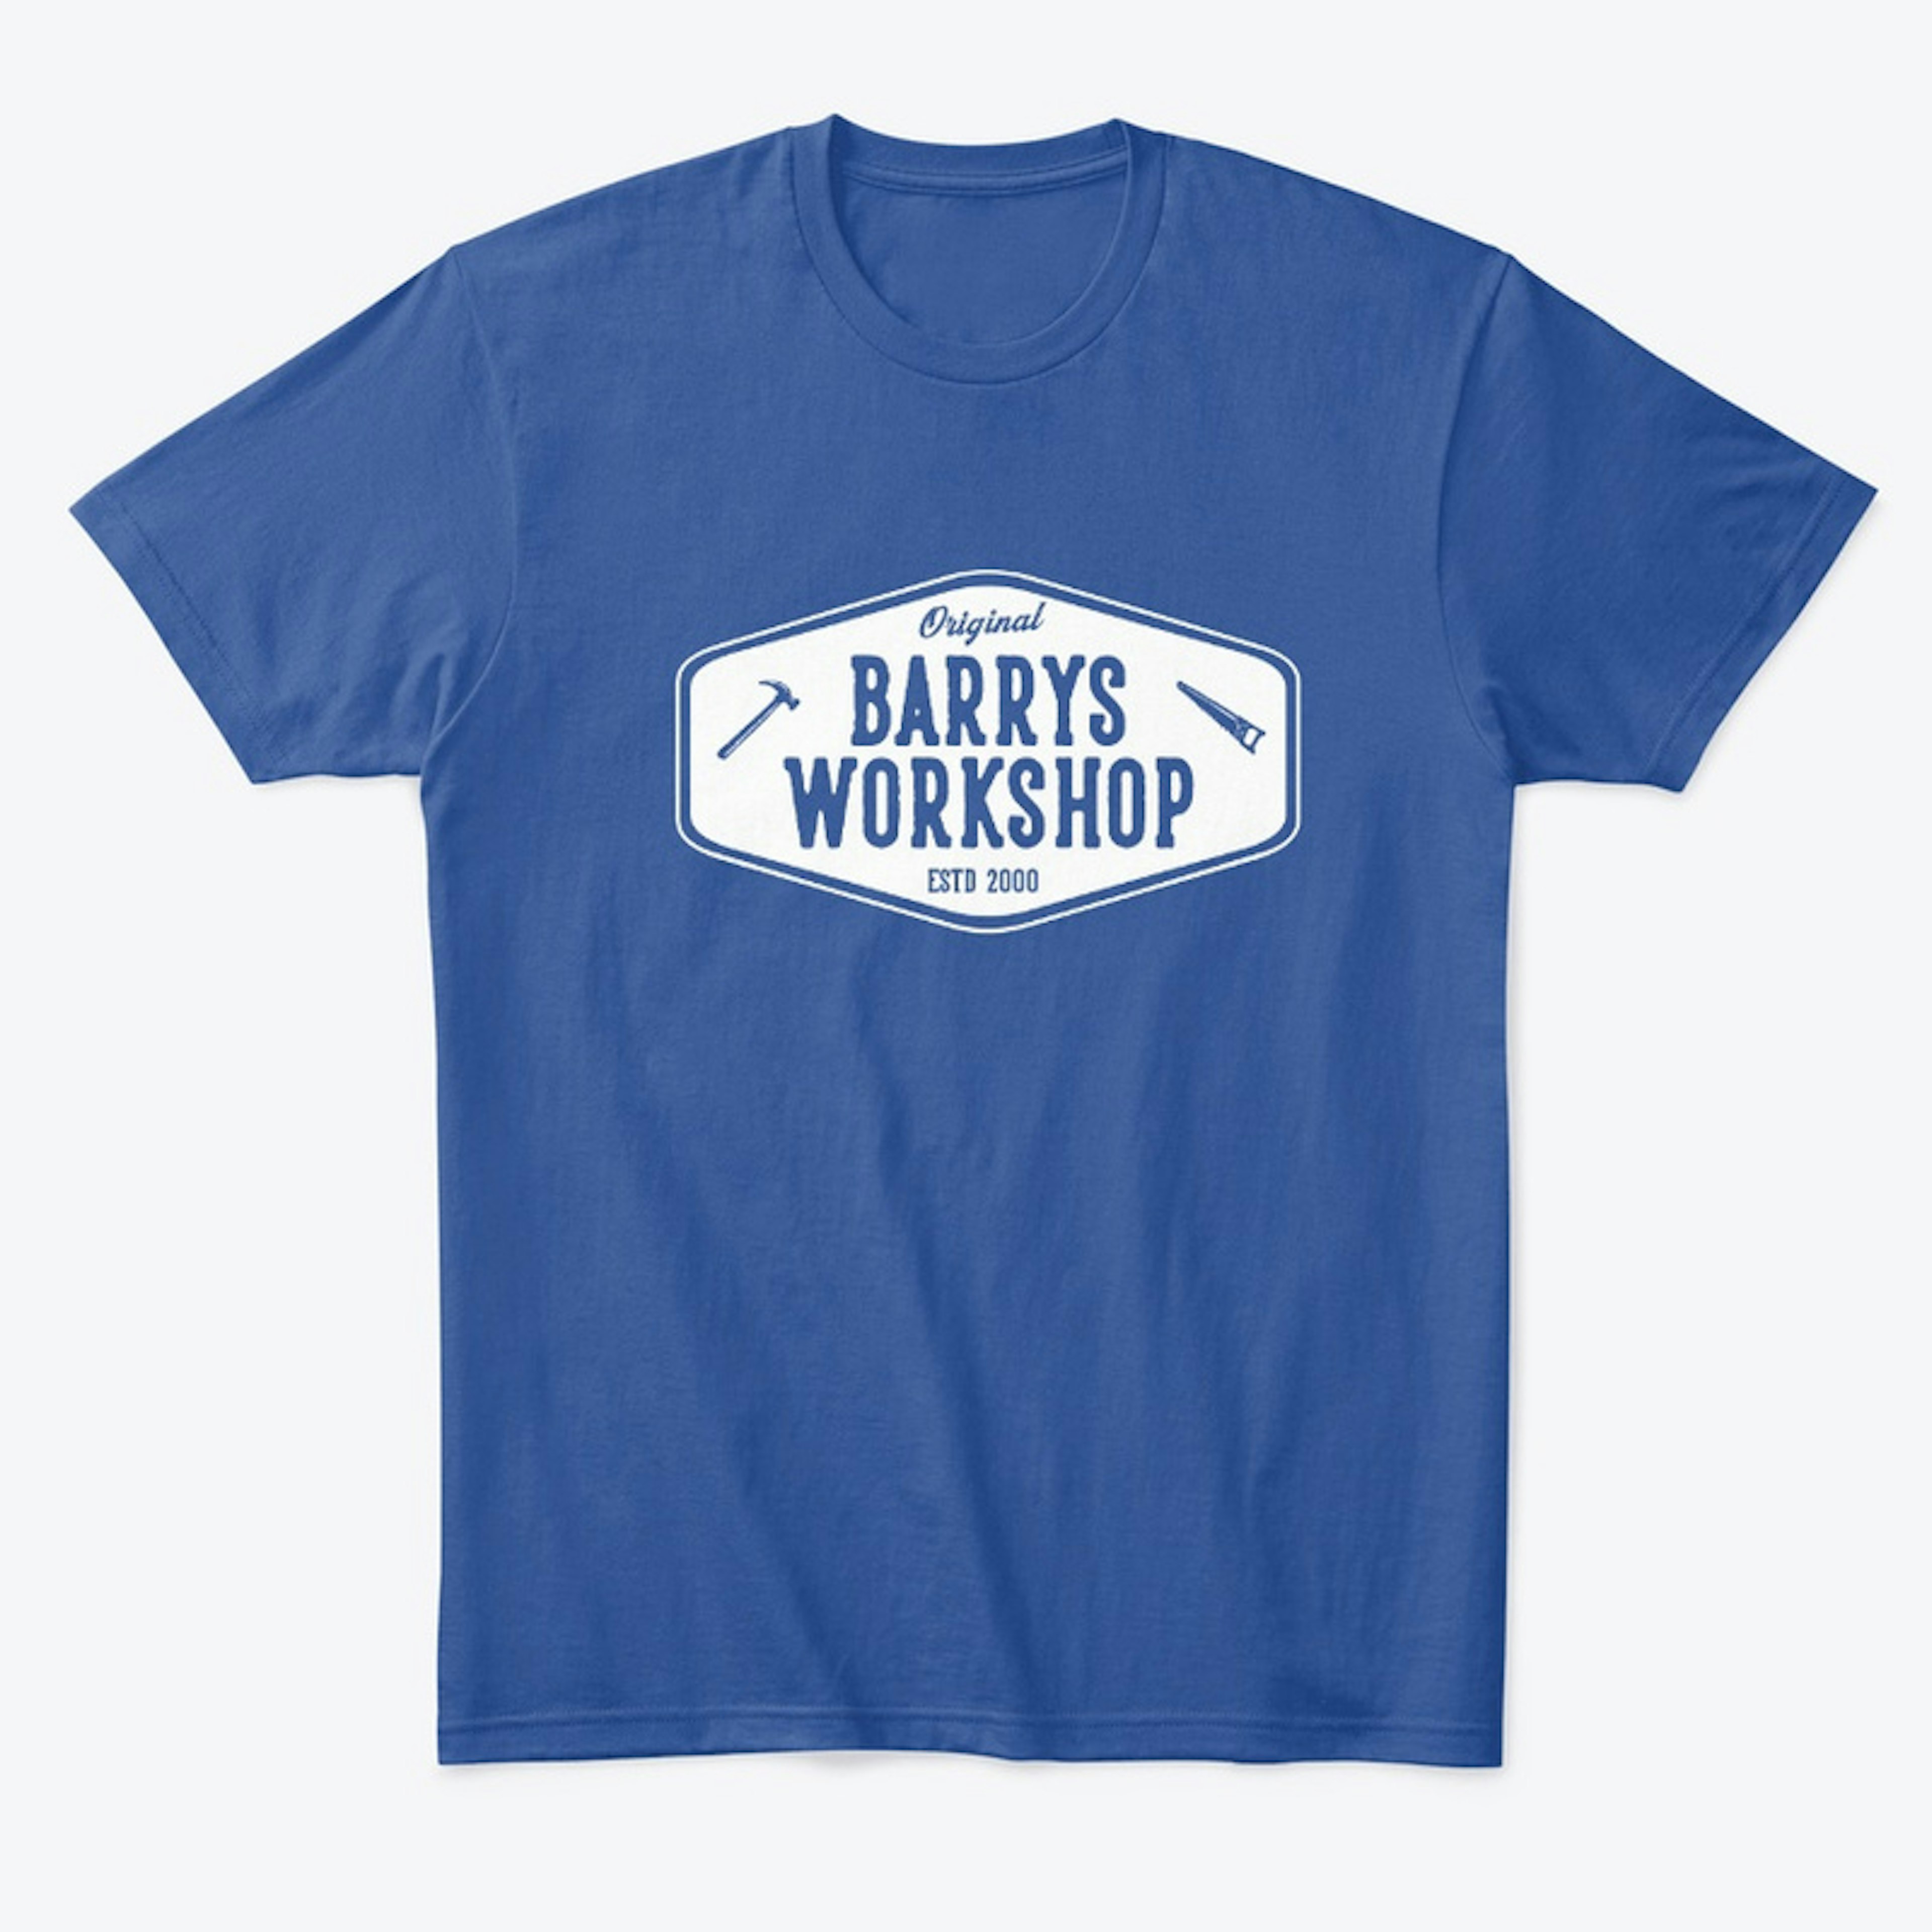 Barry's Workshop T-shirt